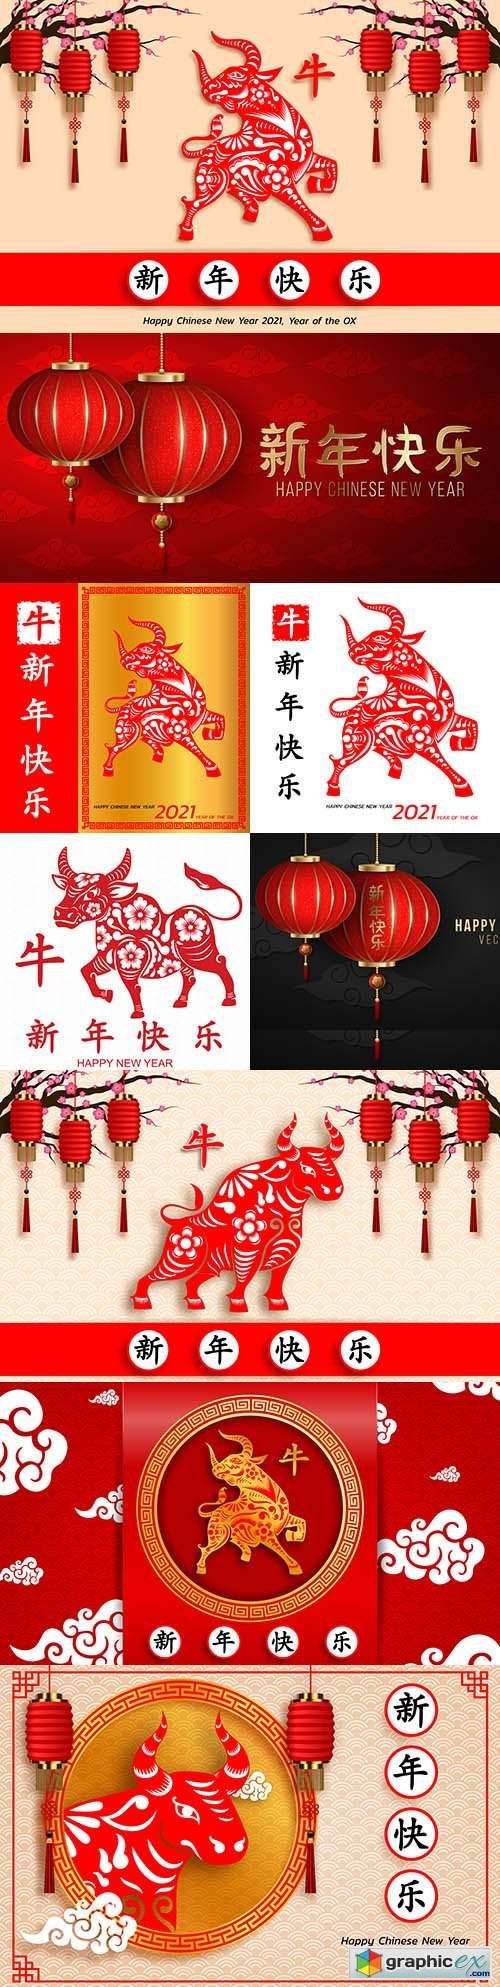  Happy Chinese New Year Bull 2021 decorative background 